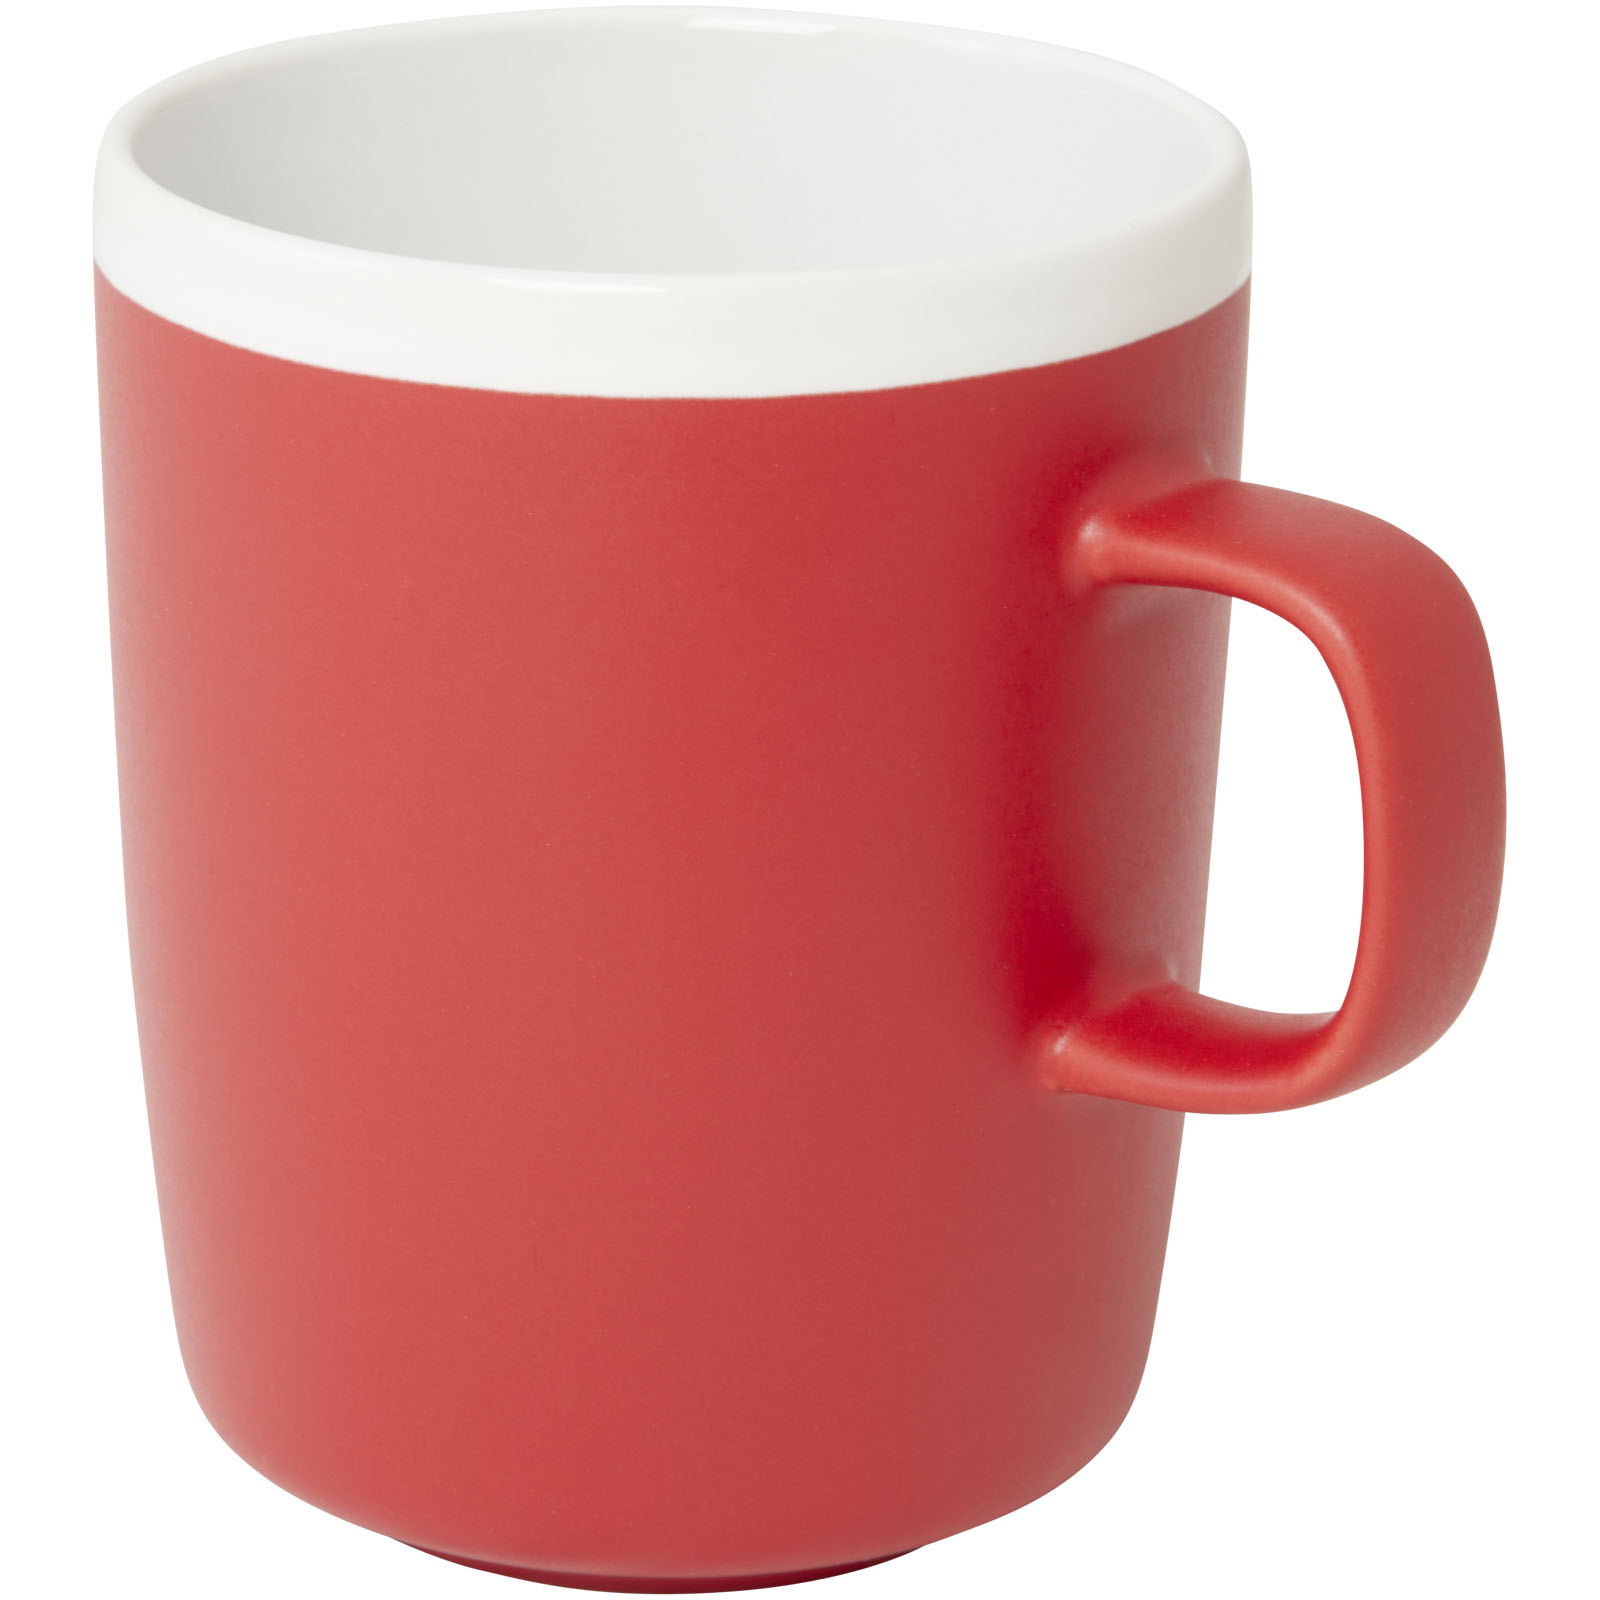 Standard mugs - Lilio 310 ml ceramic mug